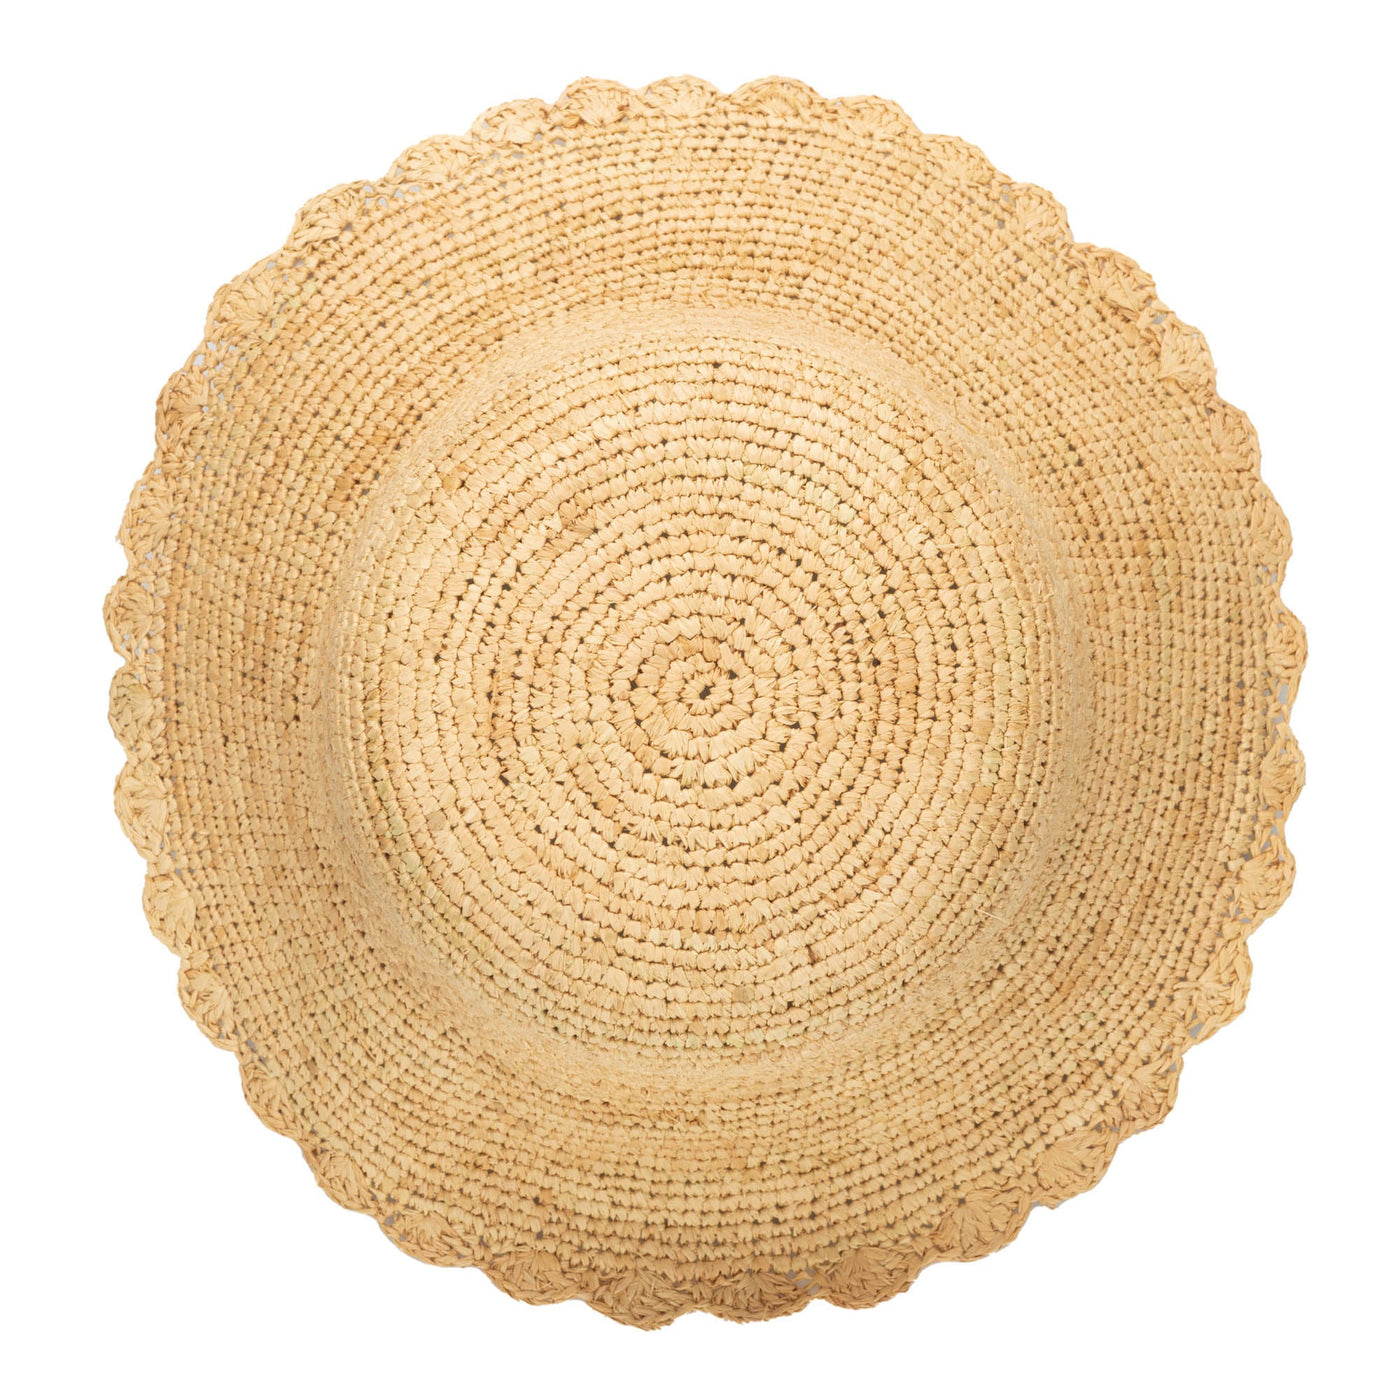 Sand Dollar - Hand Crochet Bucket Hat with Scalloped Brim (RHM6216)-BUCKET-San Diego Hat Company